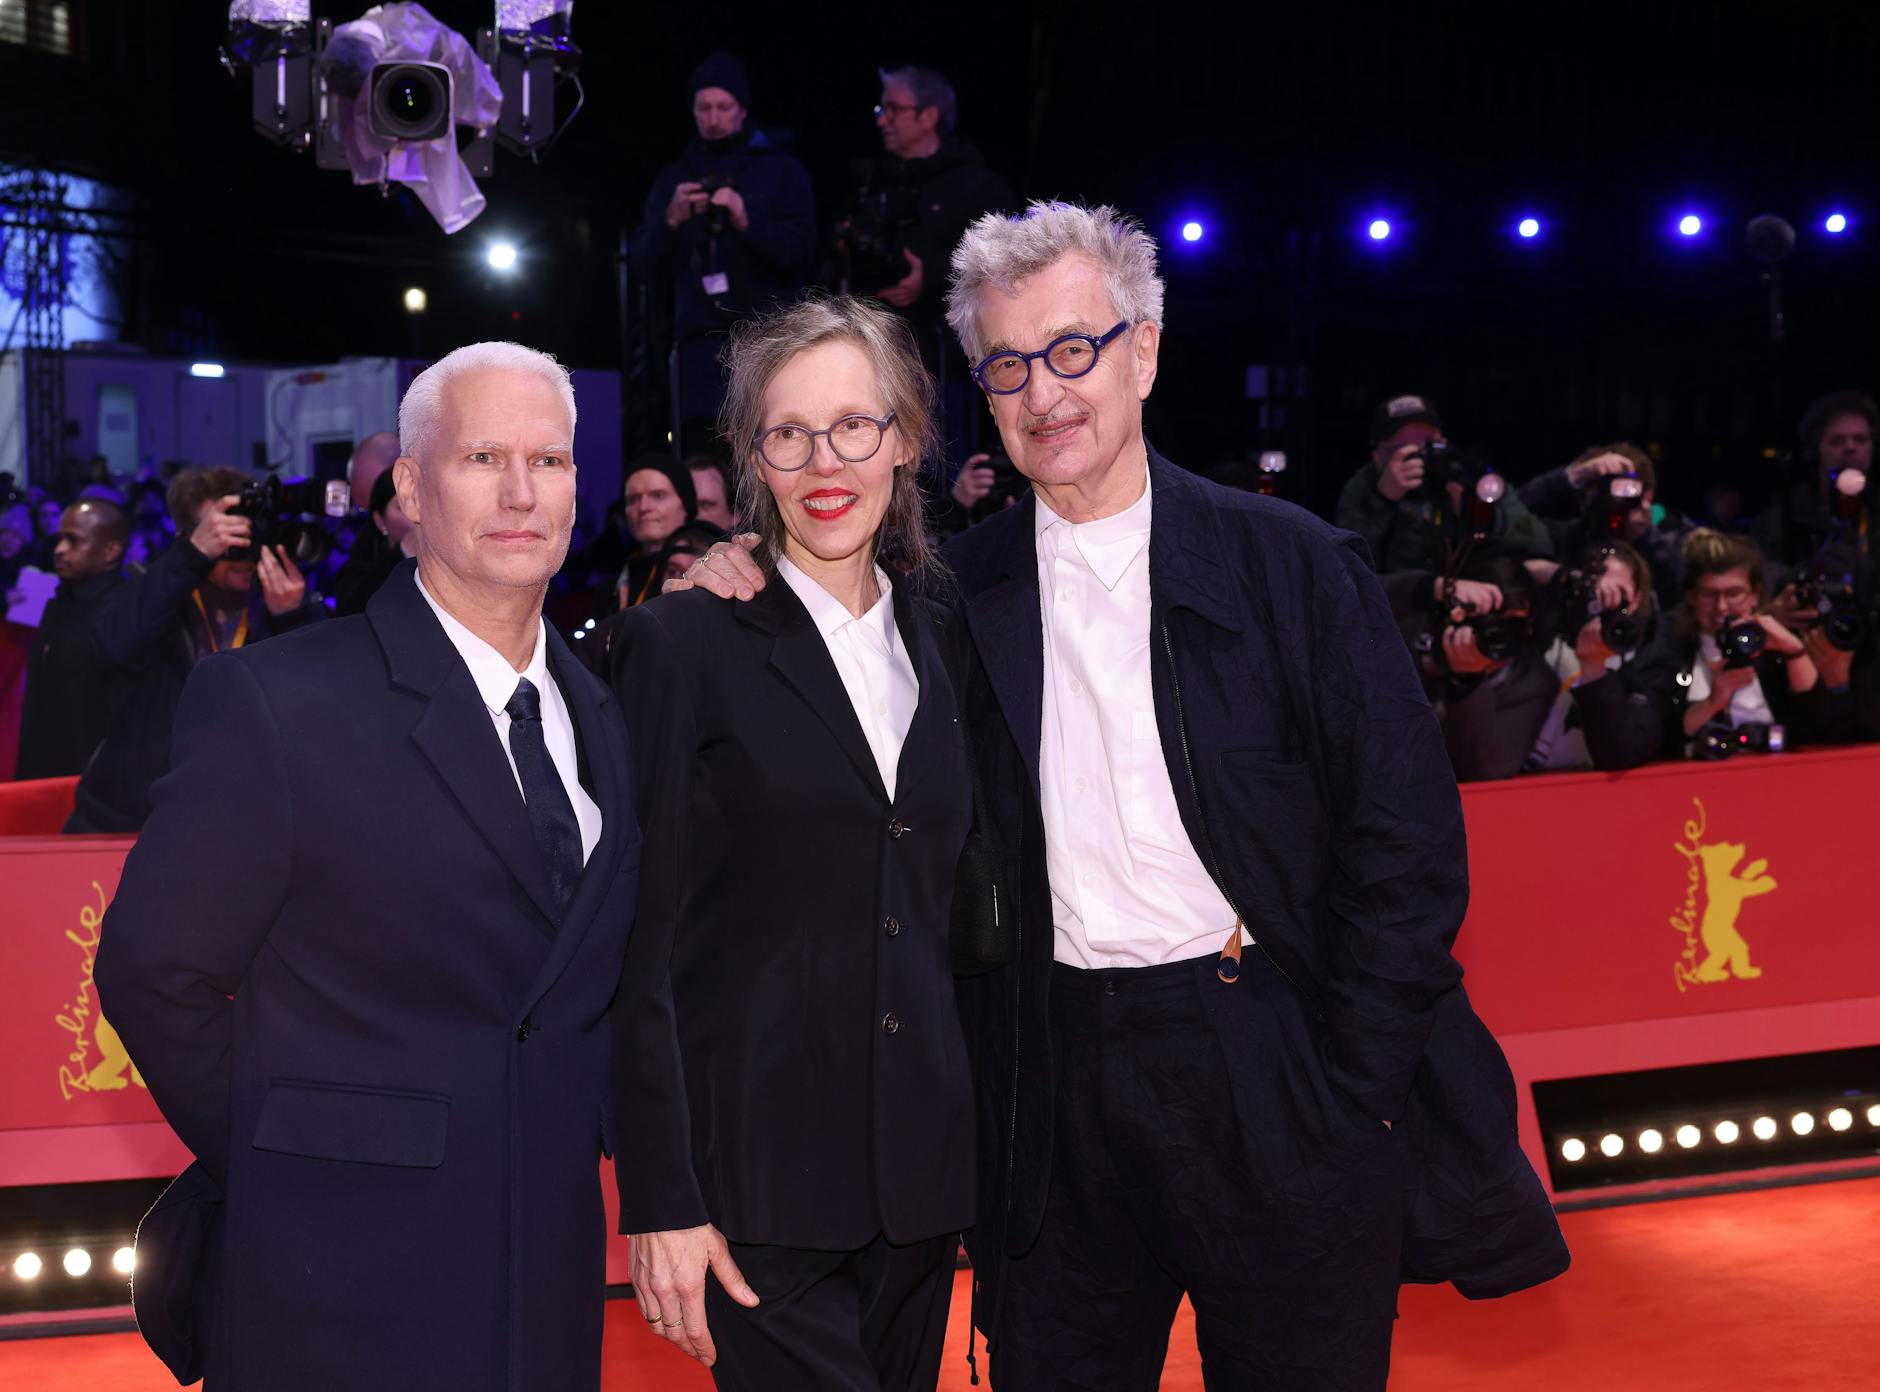 Klaus Biesenbach (left), director of the Neue Nationalgalerie, Donata Wenders, photographer, and director Wim Wenders